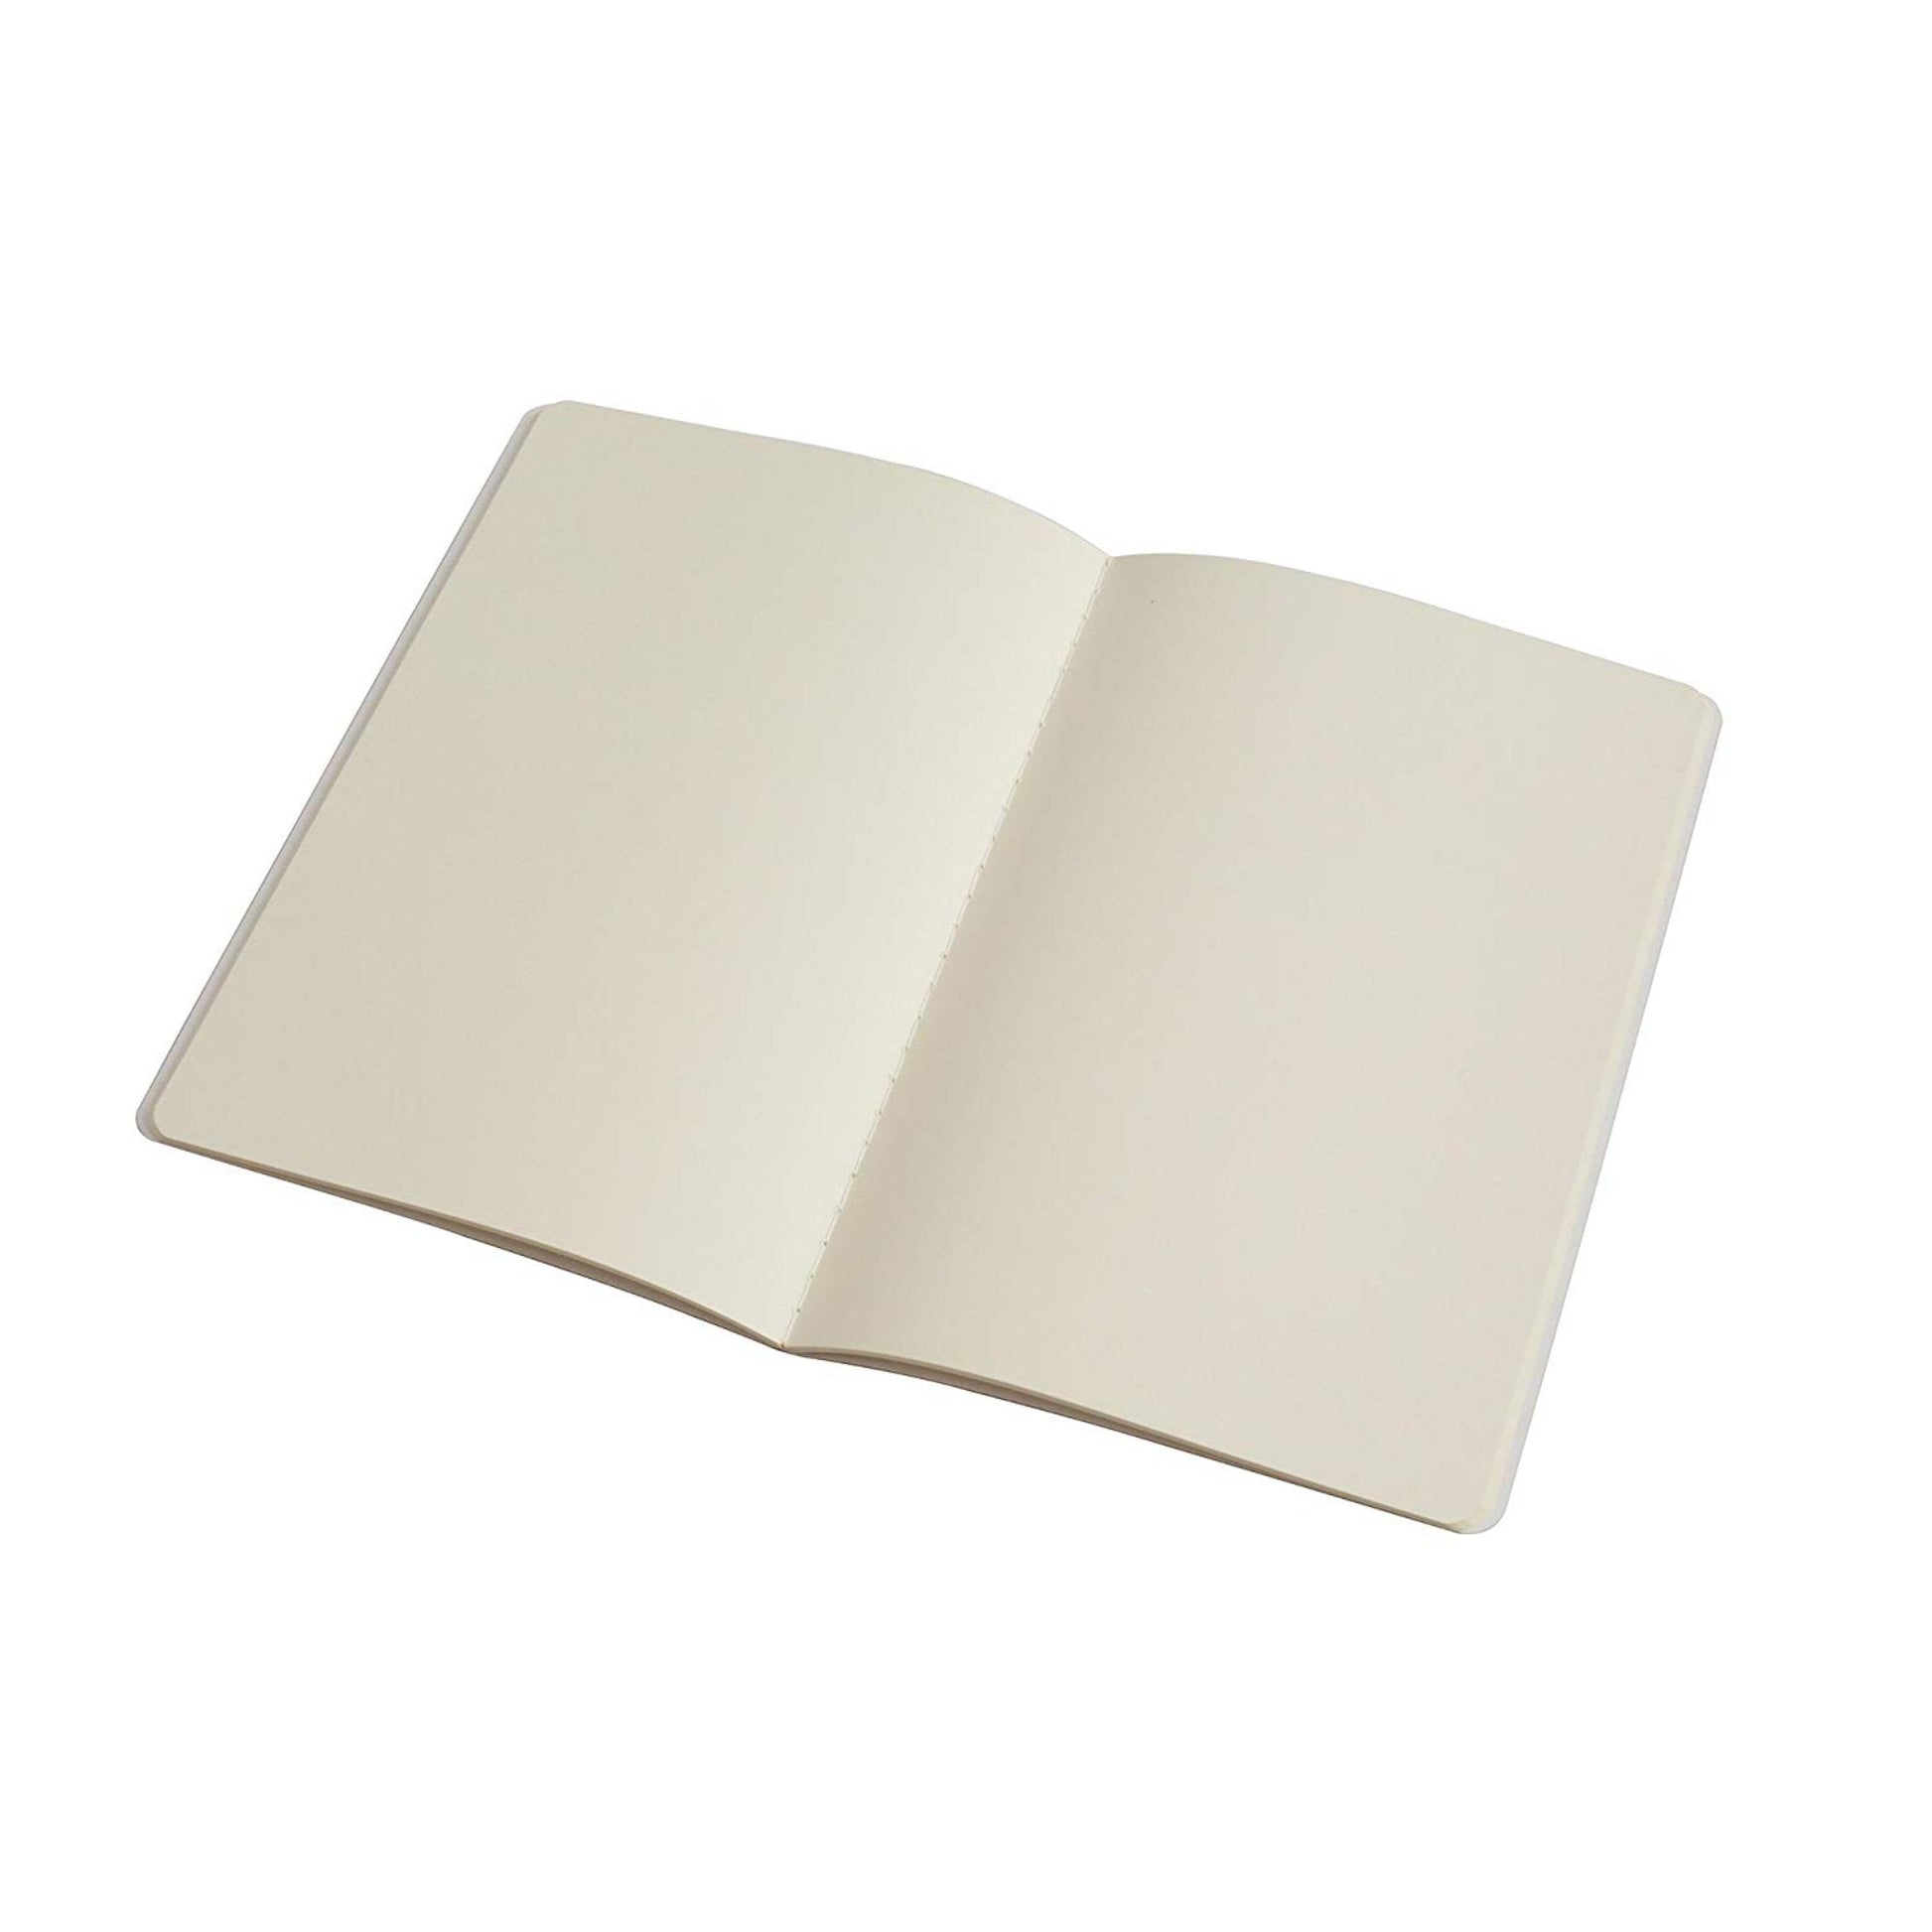 PinkPolish Design Notebook "Amanita Tall" Fungi Inspired Notebook / Sketchbook / Journal